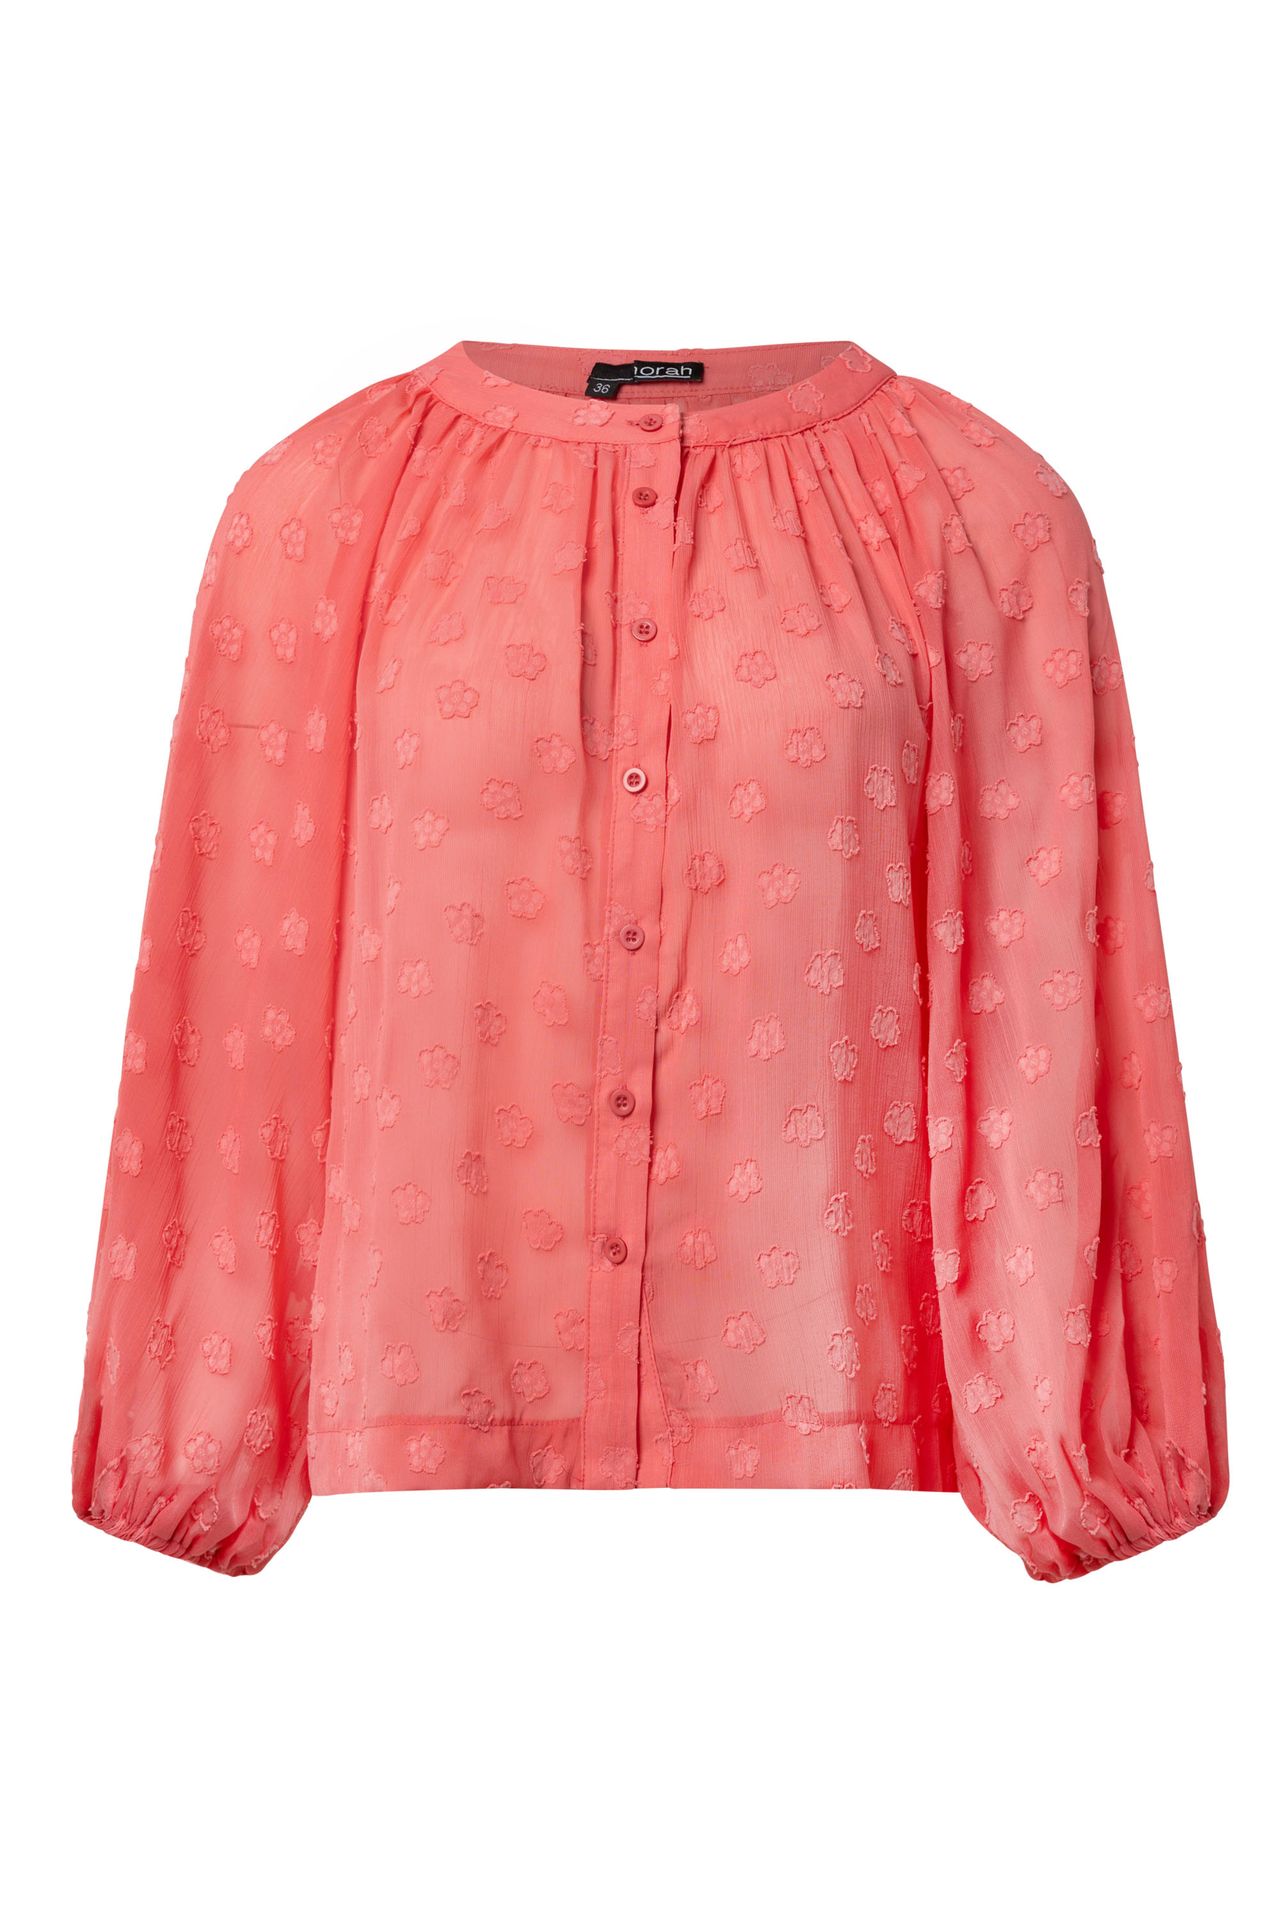 Norah Roze blouse pink 214641-900